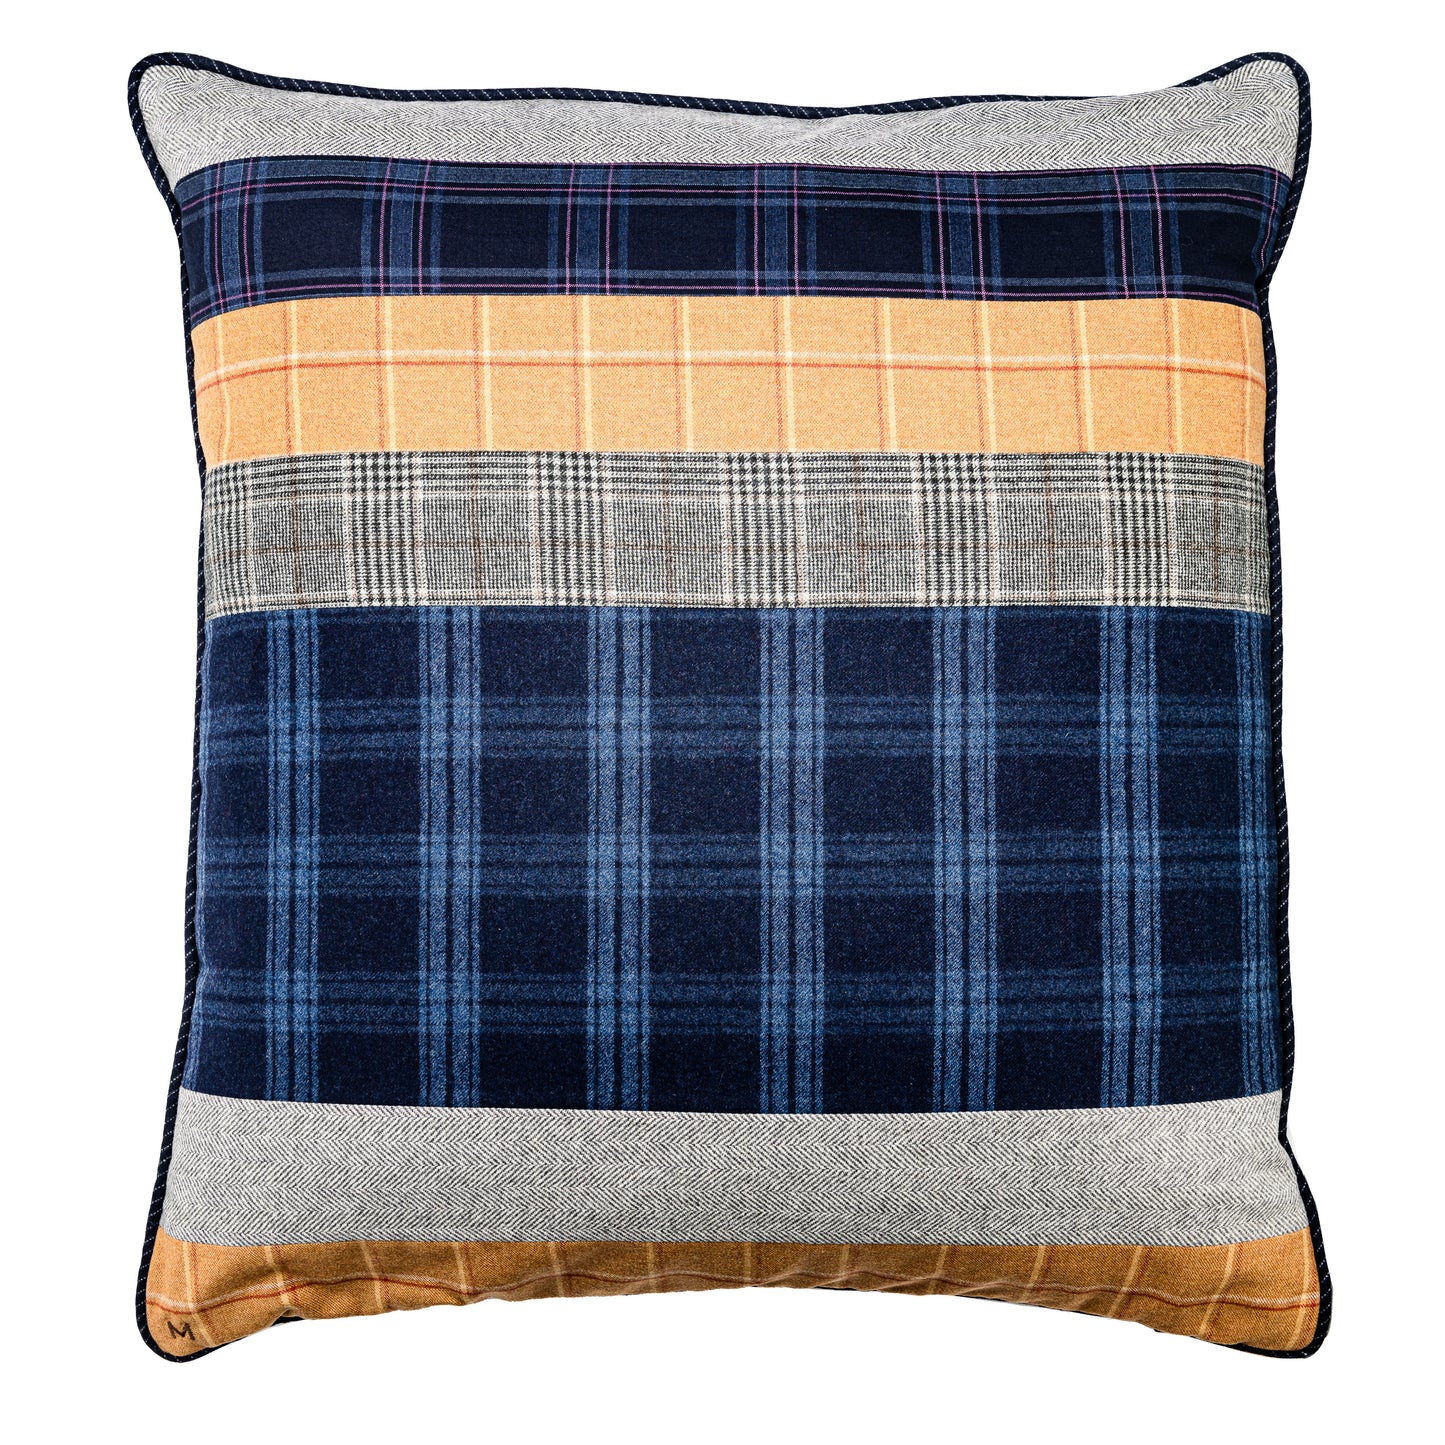 Multi Stripe Pillow Blue & Tan 28" x 28" - One of a Kind